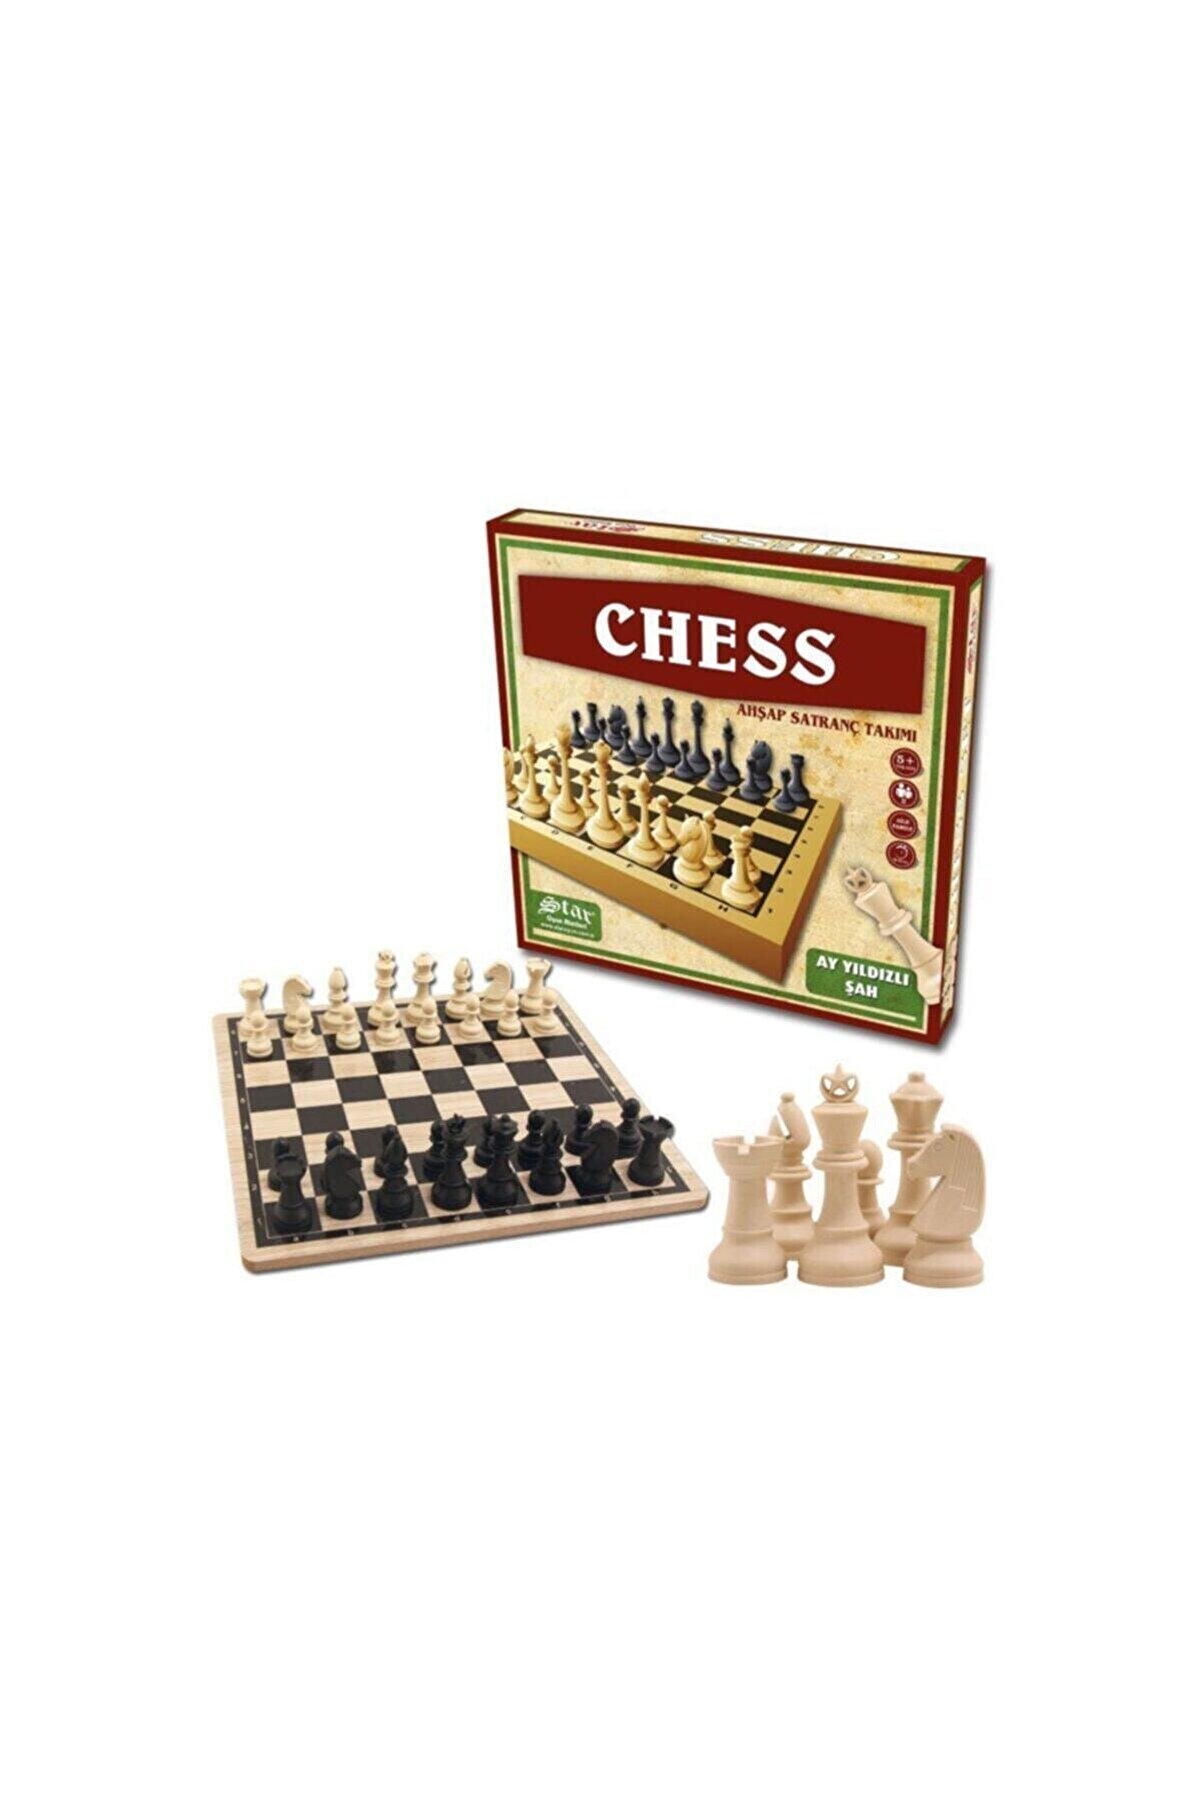 Star Oyun Star Chess Ahşap Satranç Takımı